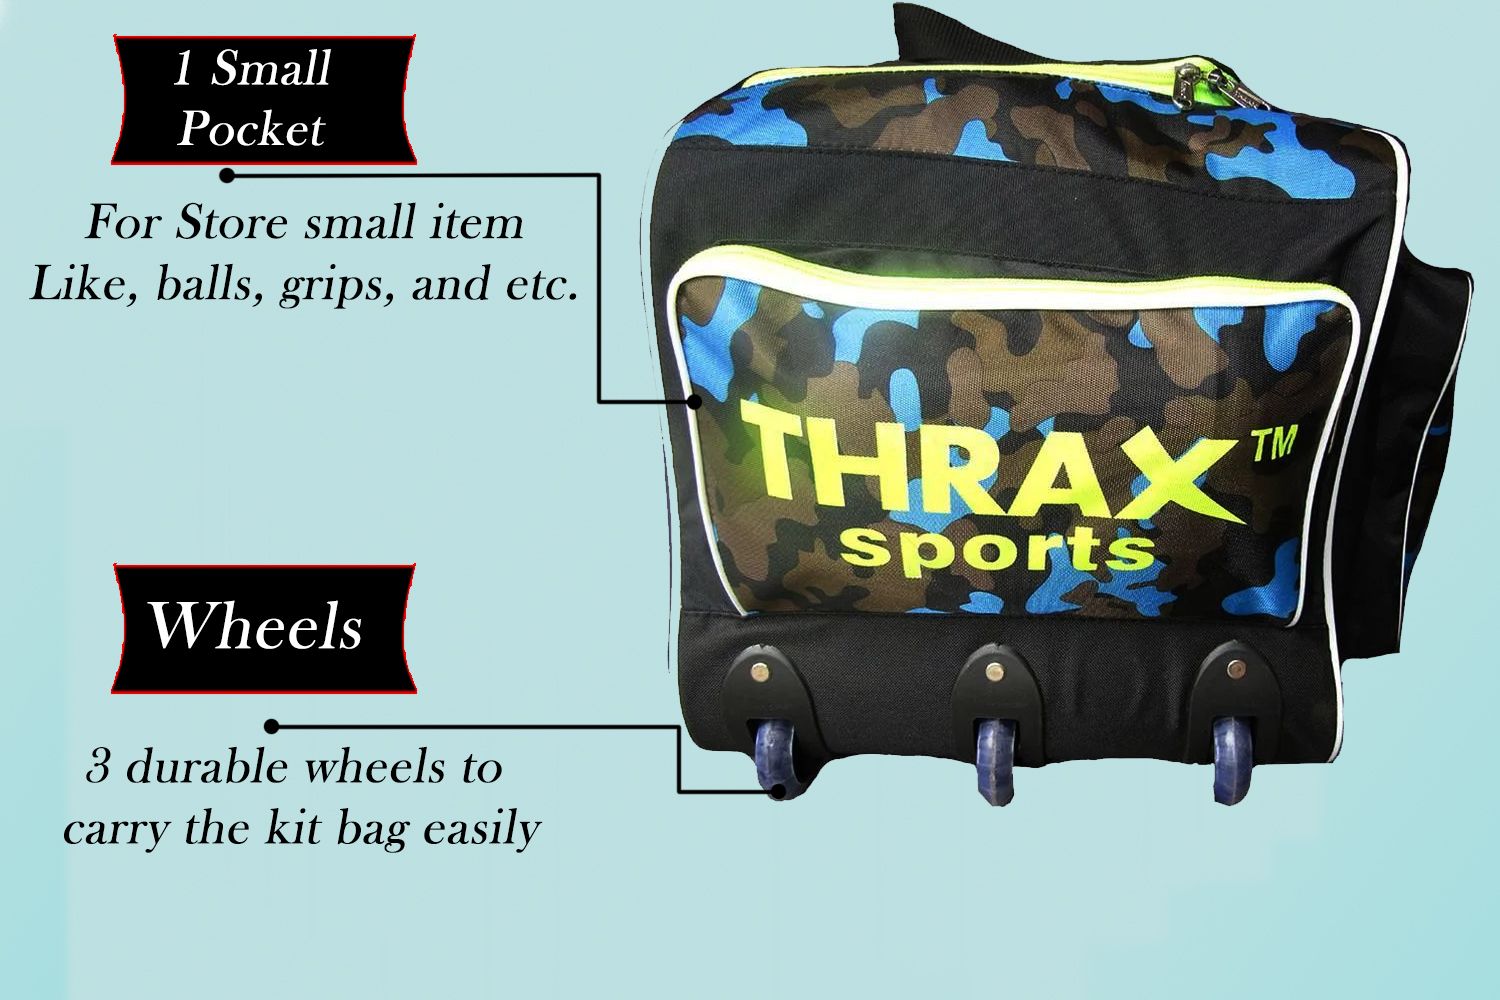 Thrax Super Pack Wheel Cricket Kit Bag Army Blue Black Lime